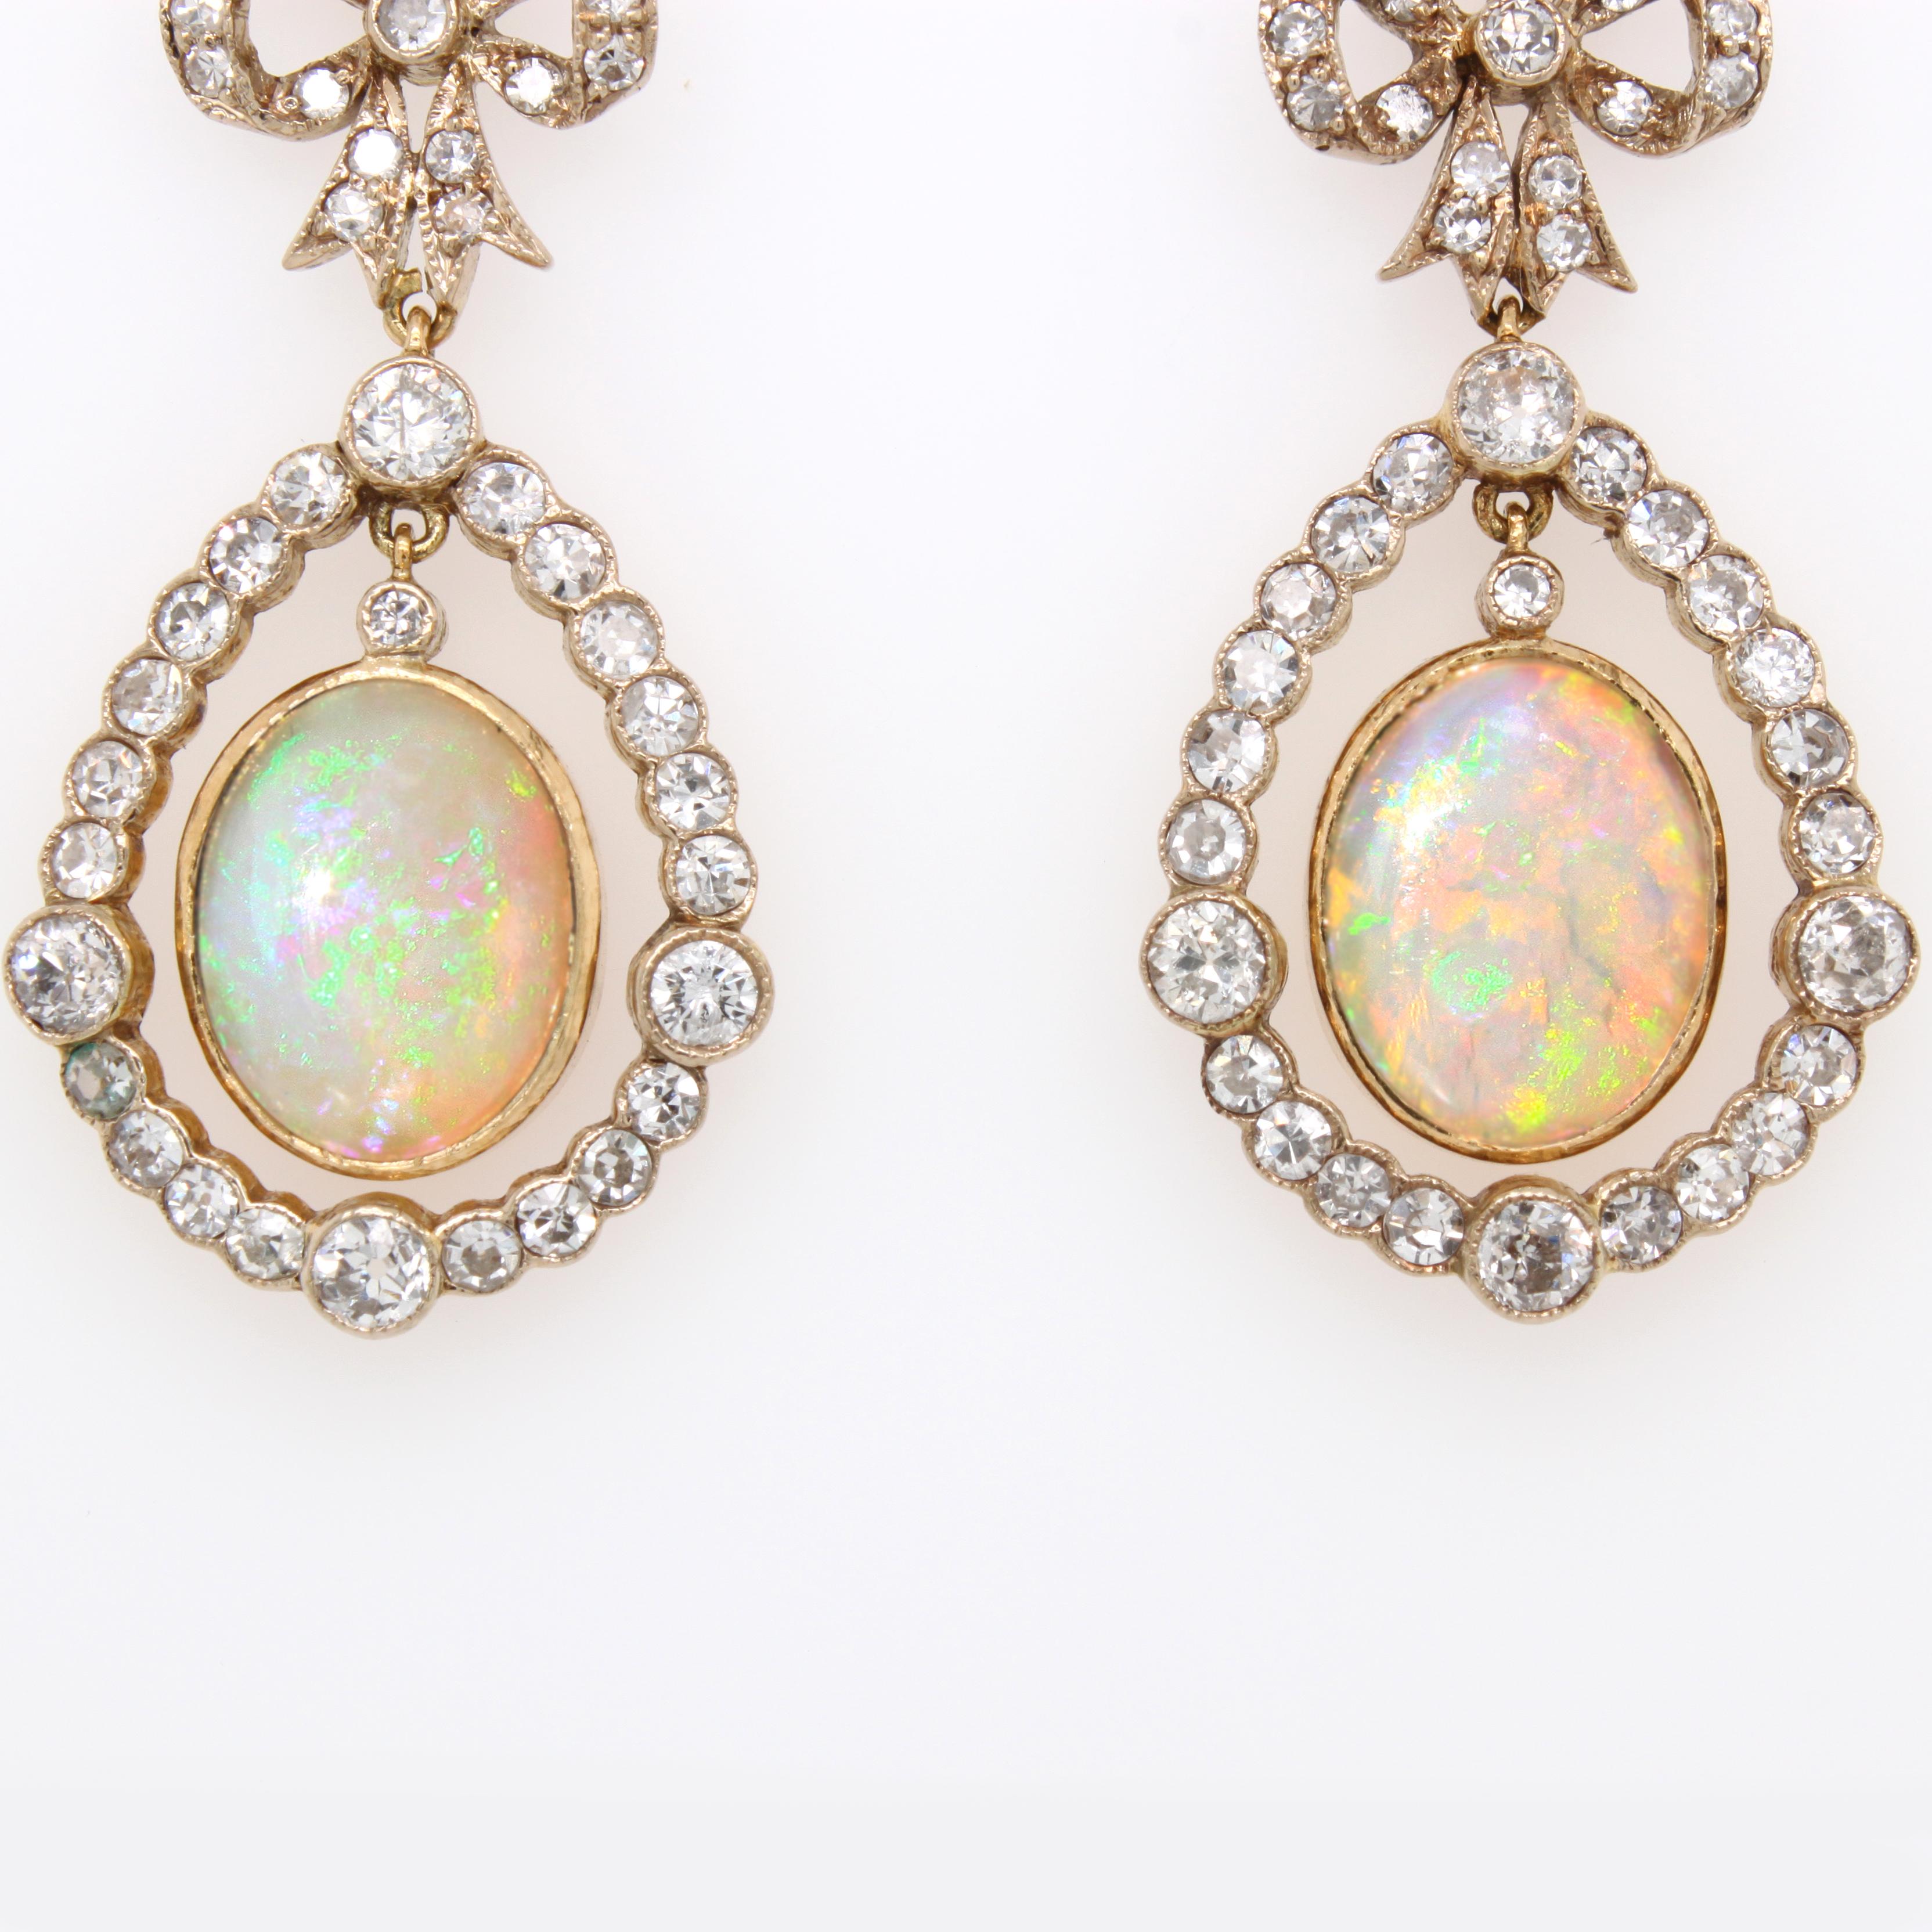 Cabochon Opal and Diamond Earrings